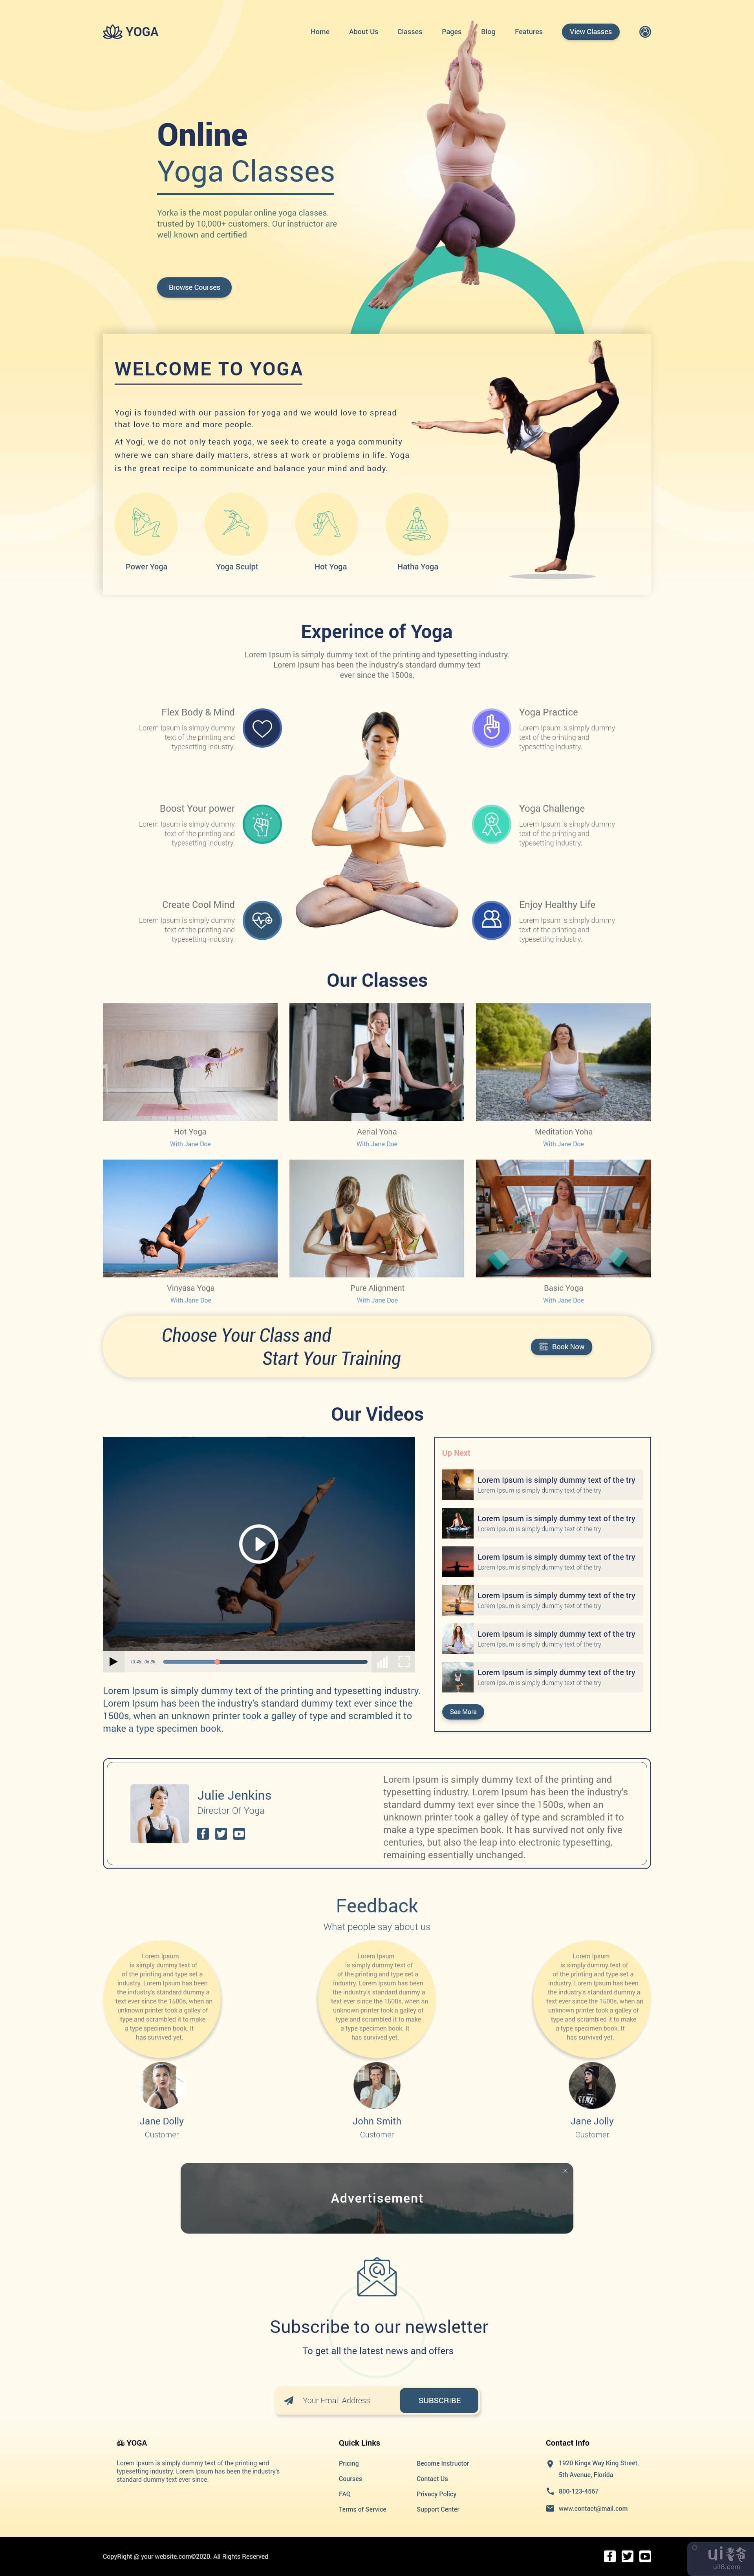 在线瑜伽和冥想课程登陆页面(Online Yoga & Meditation Classes Landing Page)插图